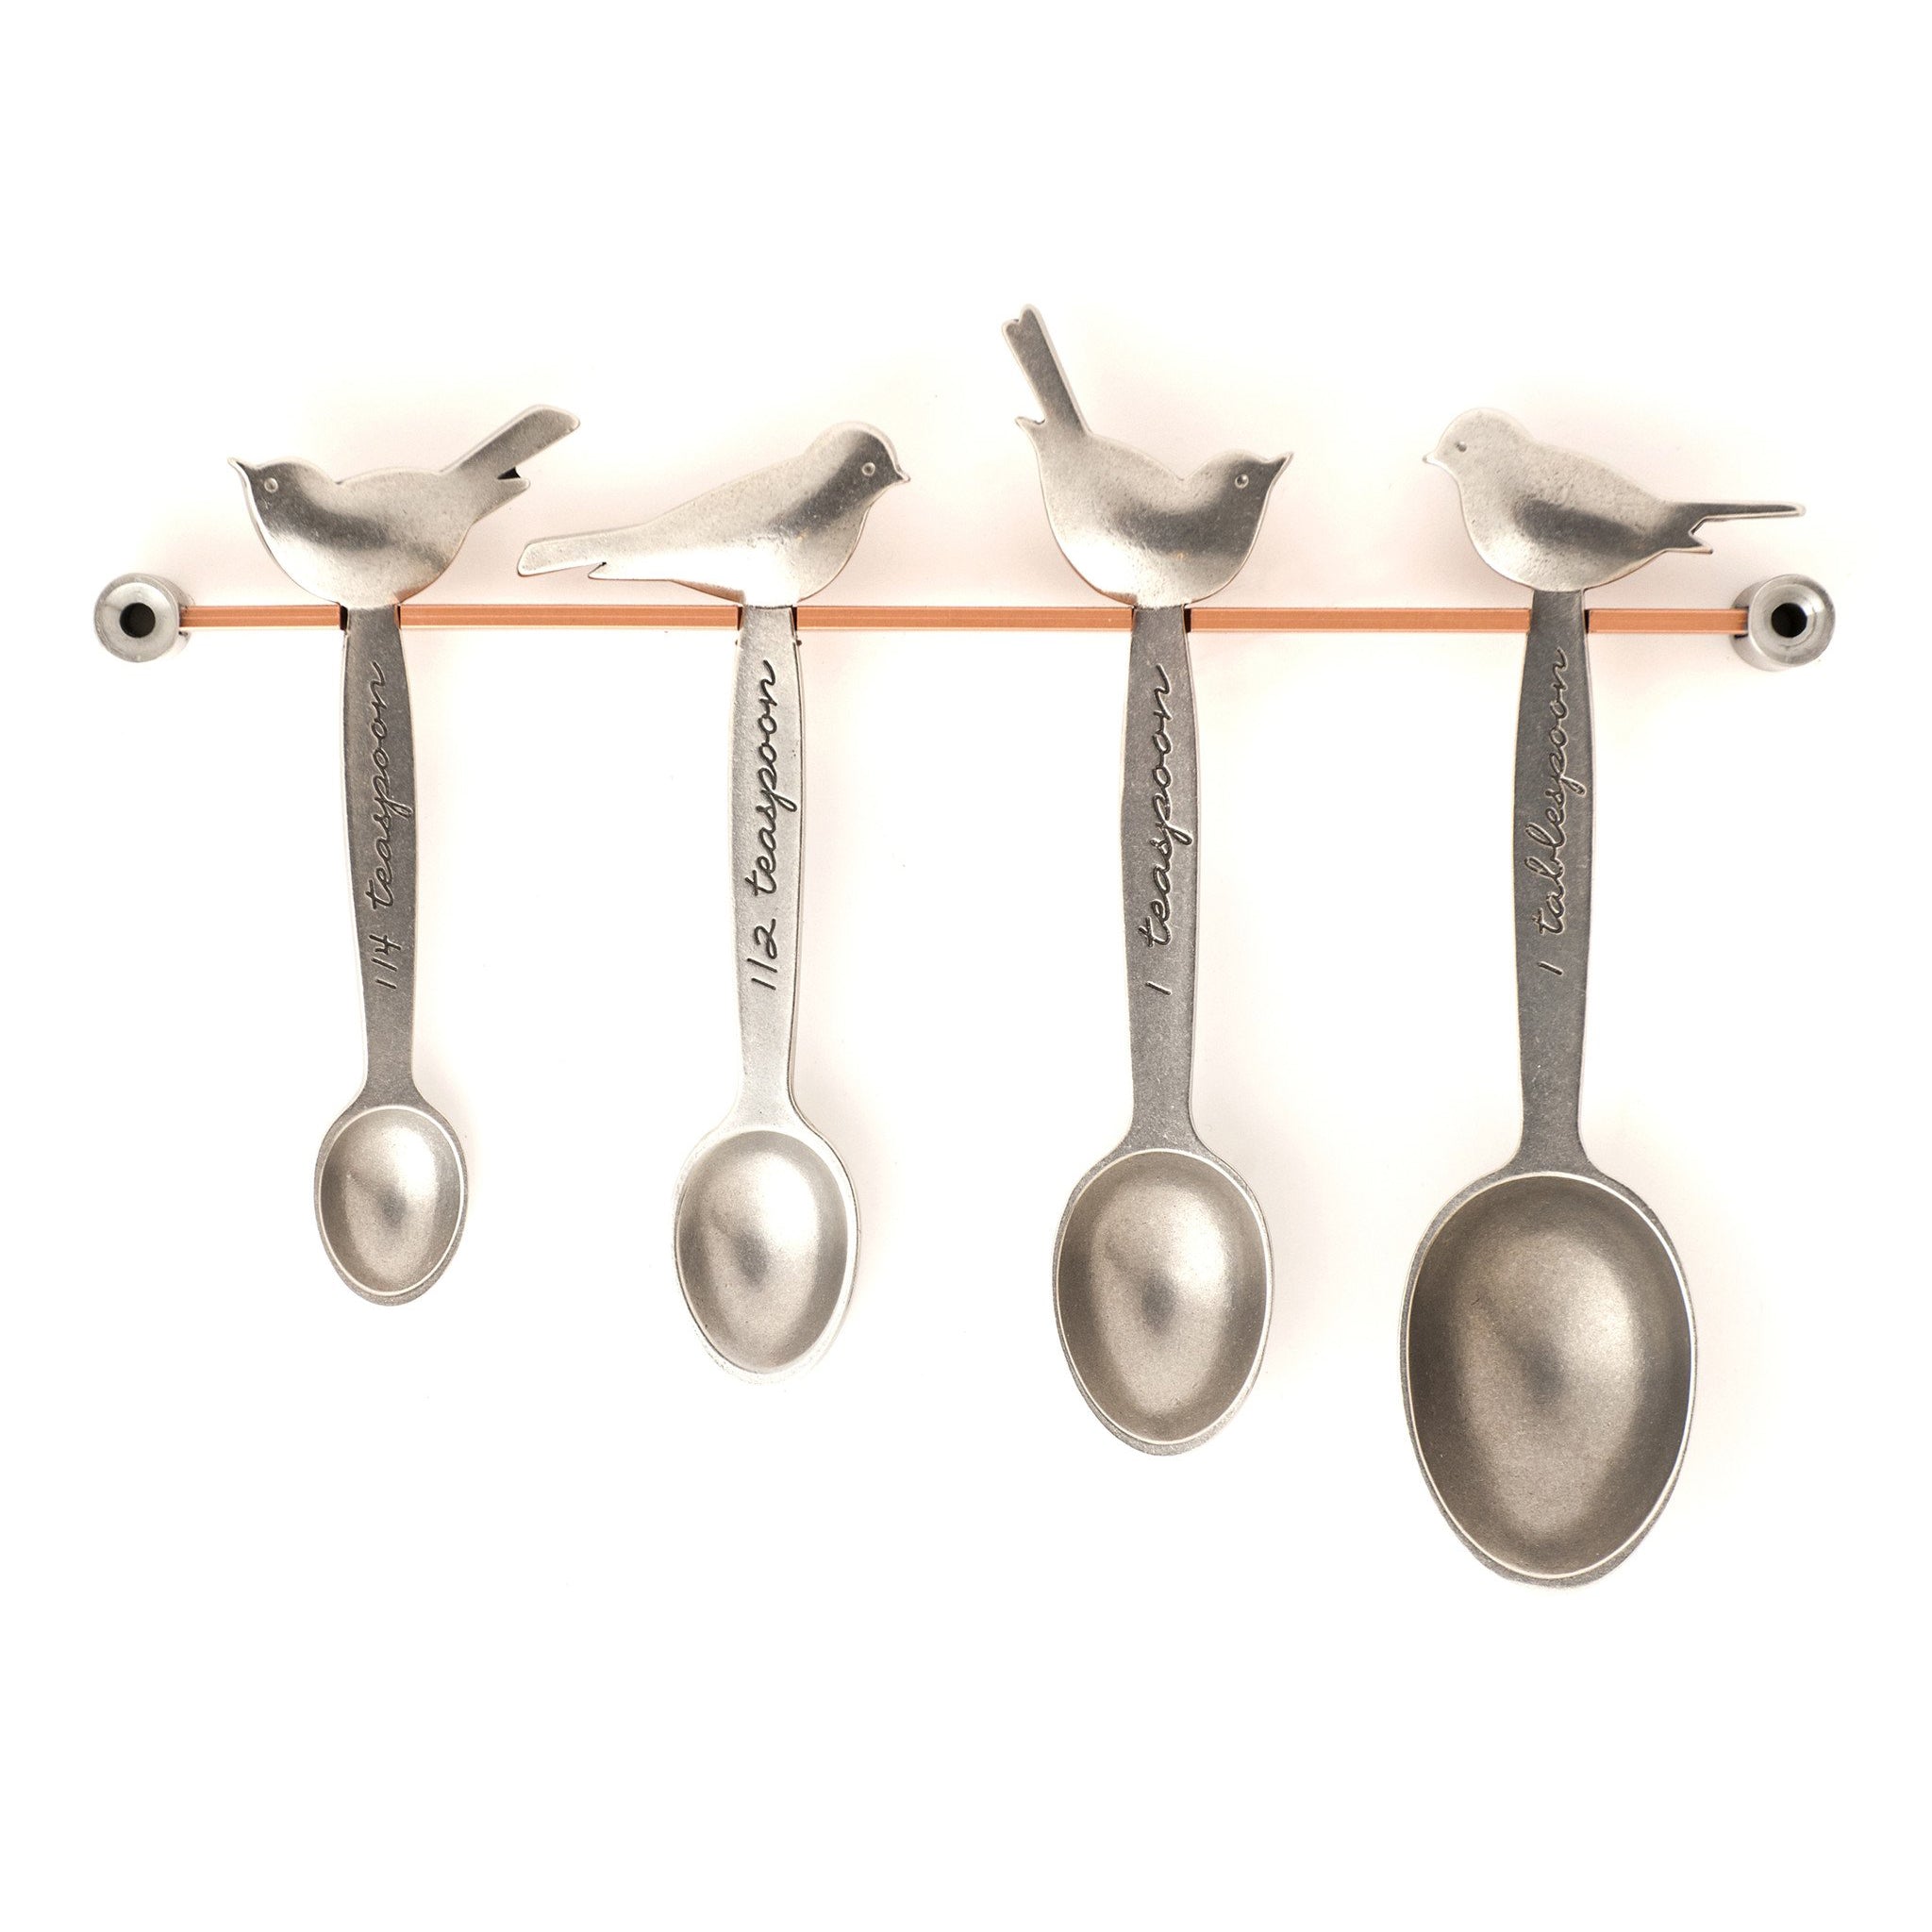 Measuring Spoon Set (1/4 tsp - 1 Tsp) 